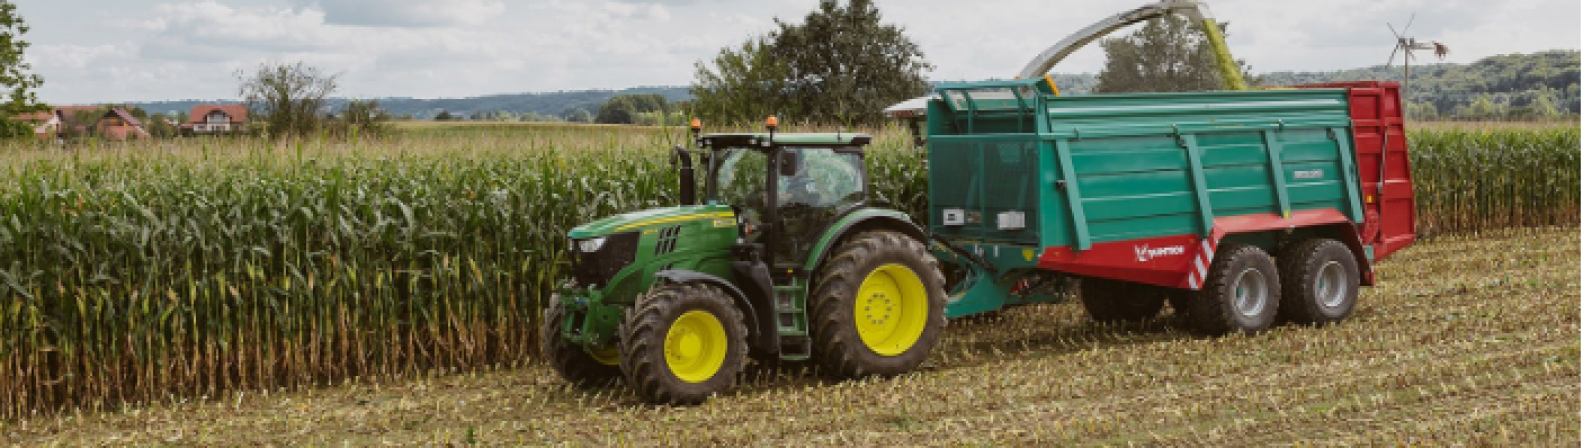 MK Landmaschinen Vertrieb Traktoren Feldarbeit